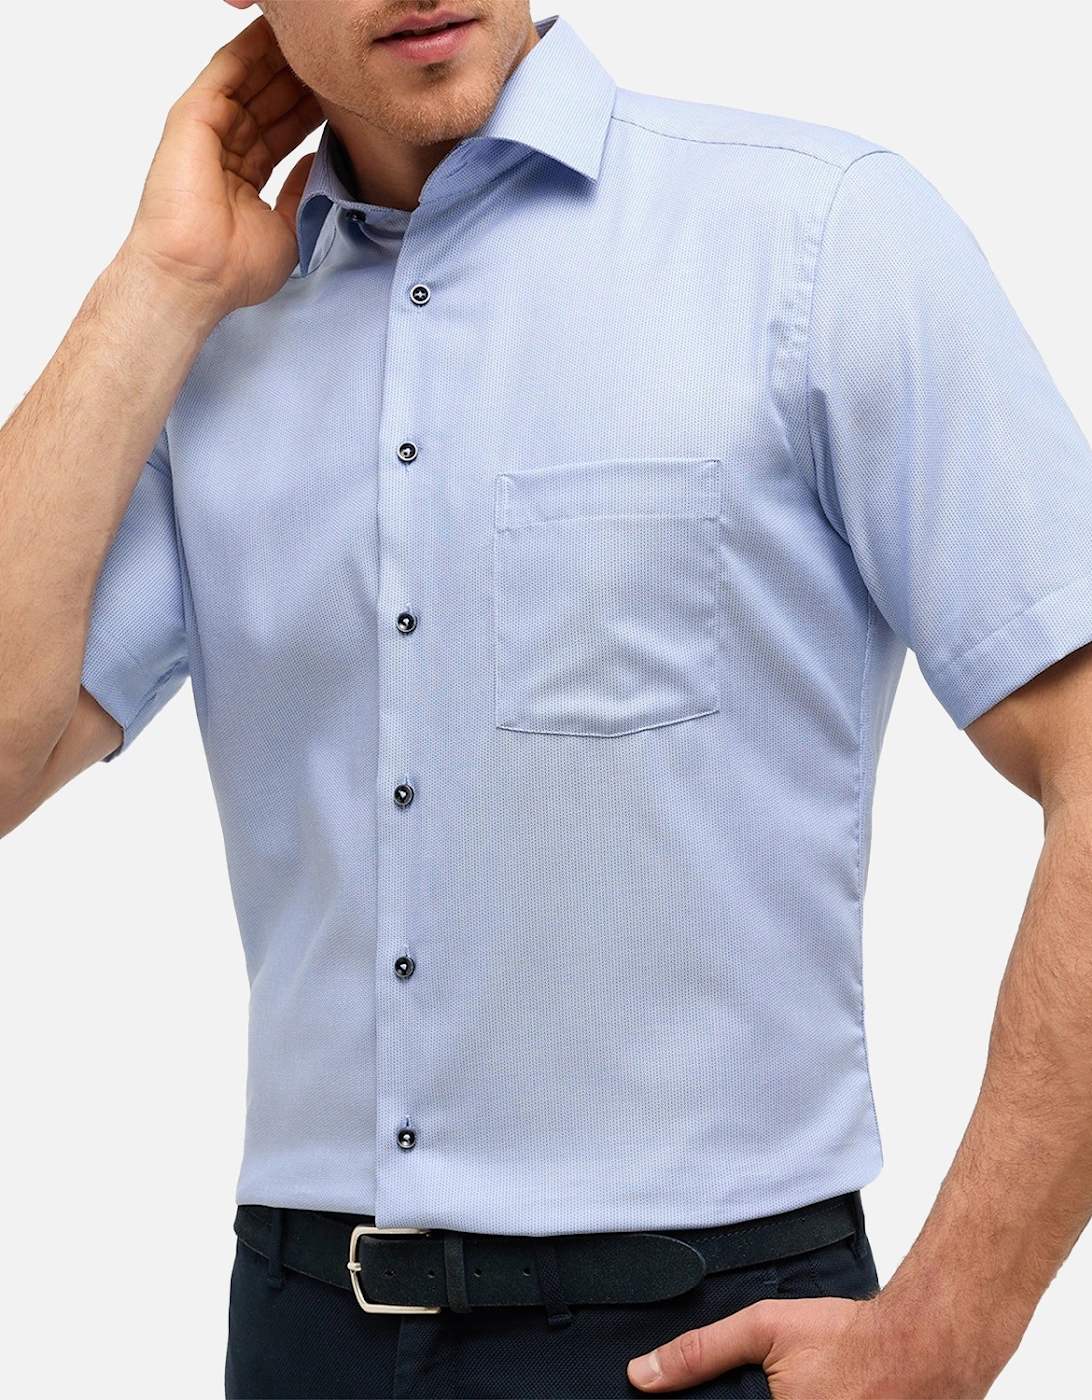 Mens 8204 Short Sleeve Shirt (Blue)